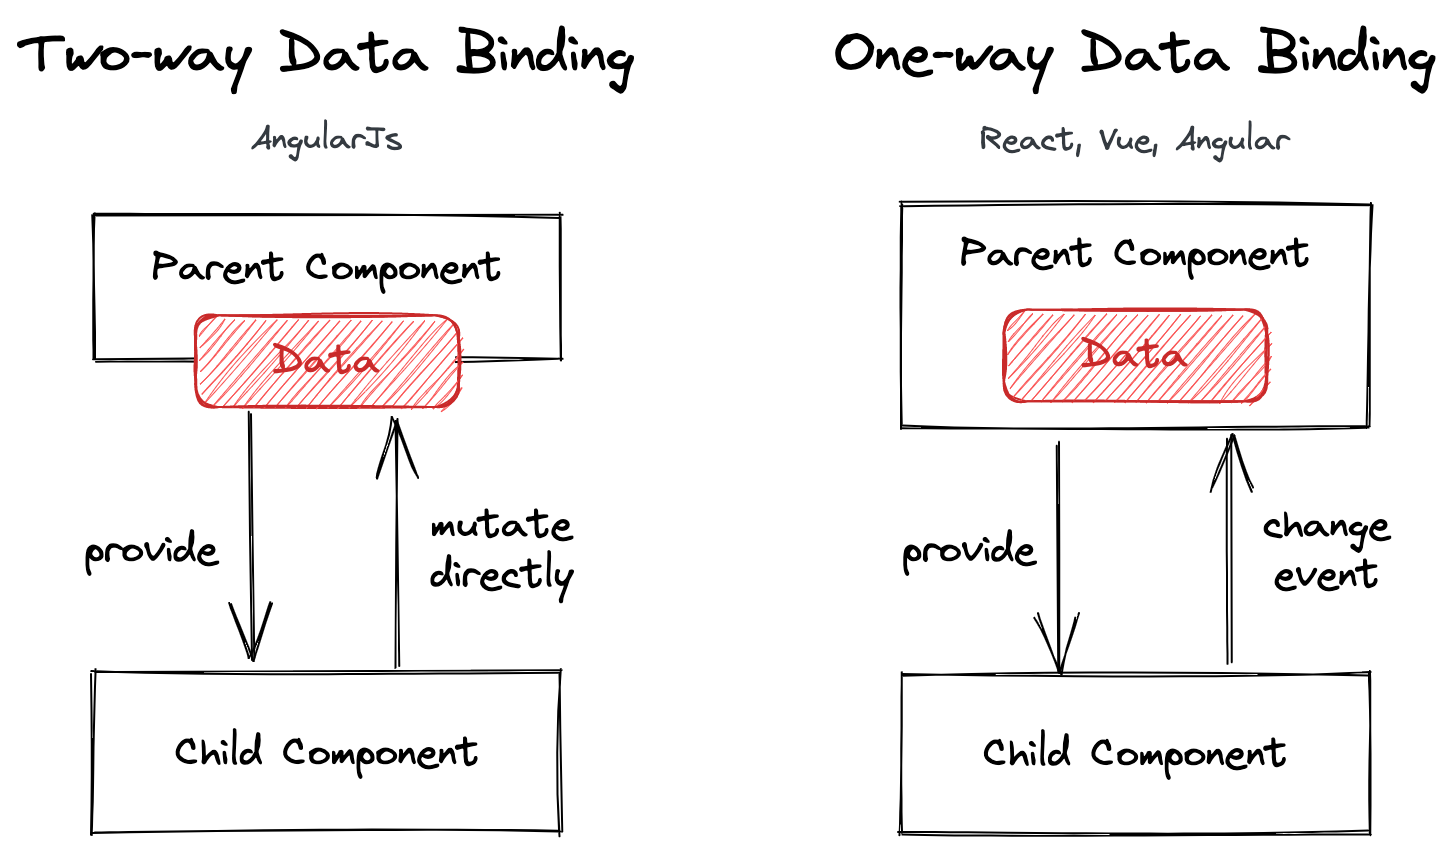 Two-way Data Binding vs. One-way Data Binding